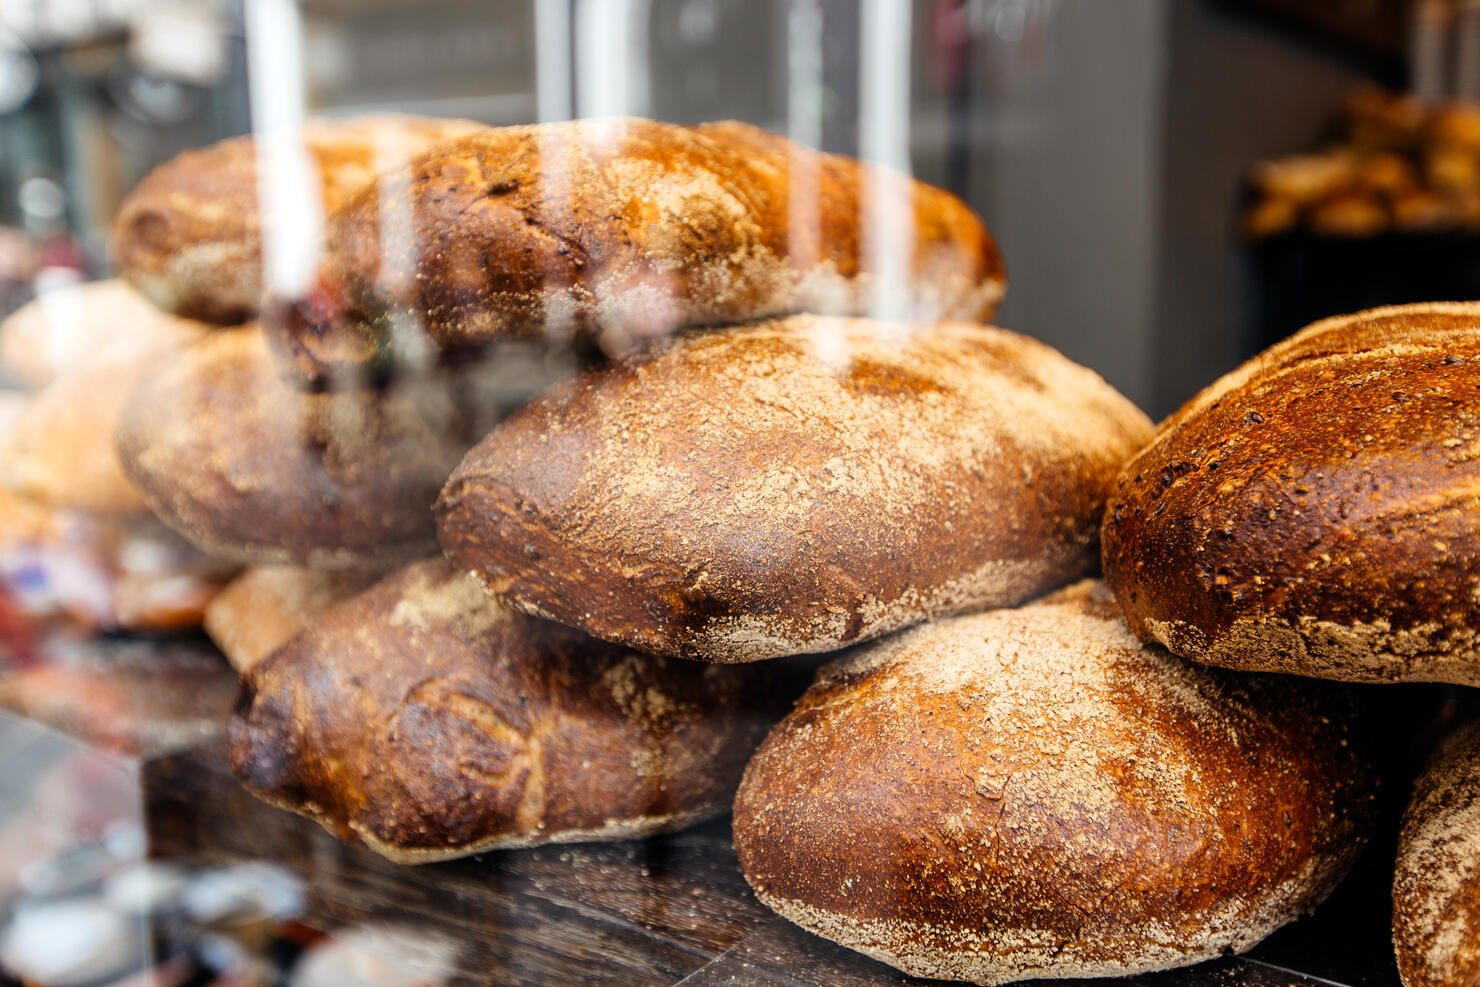 Fresh bread on a bakery display